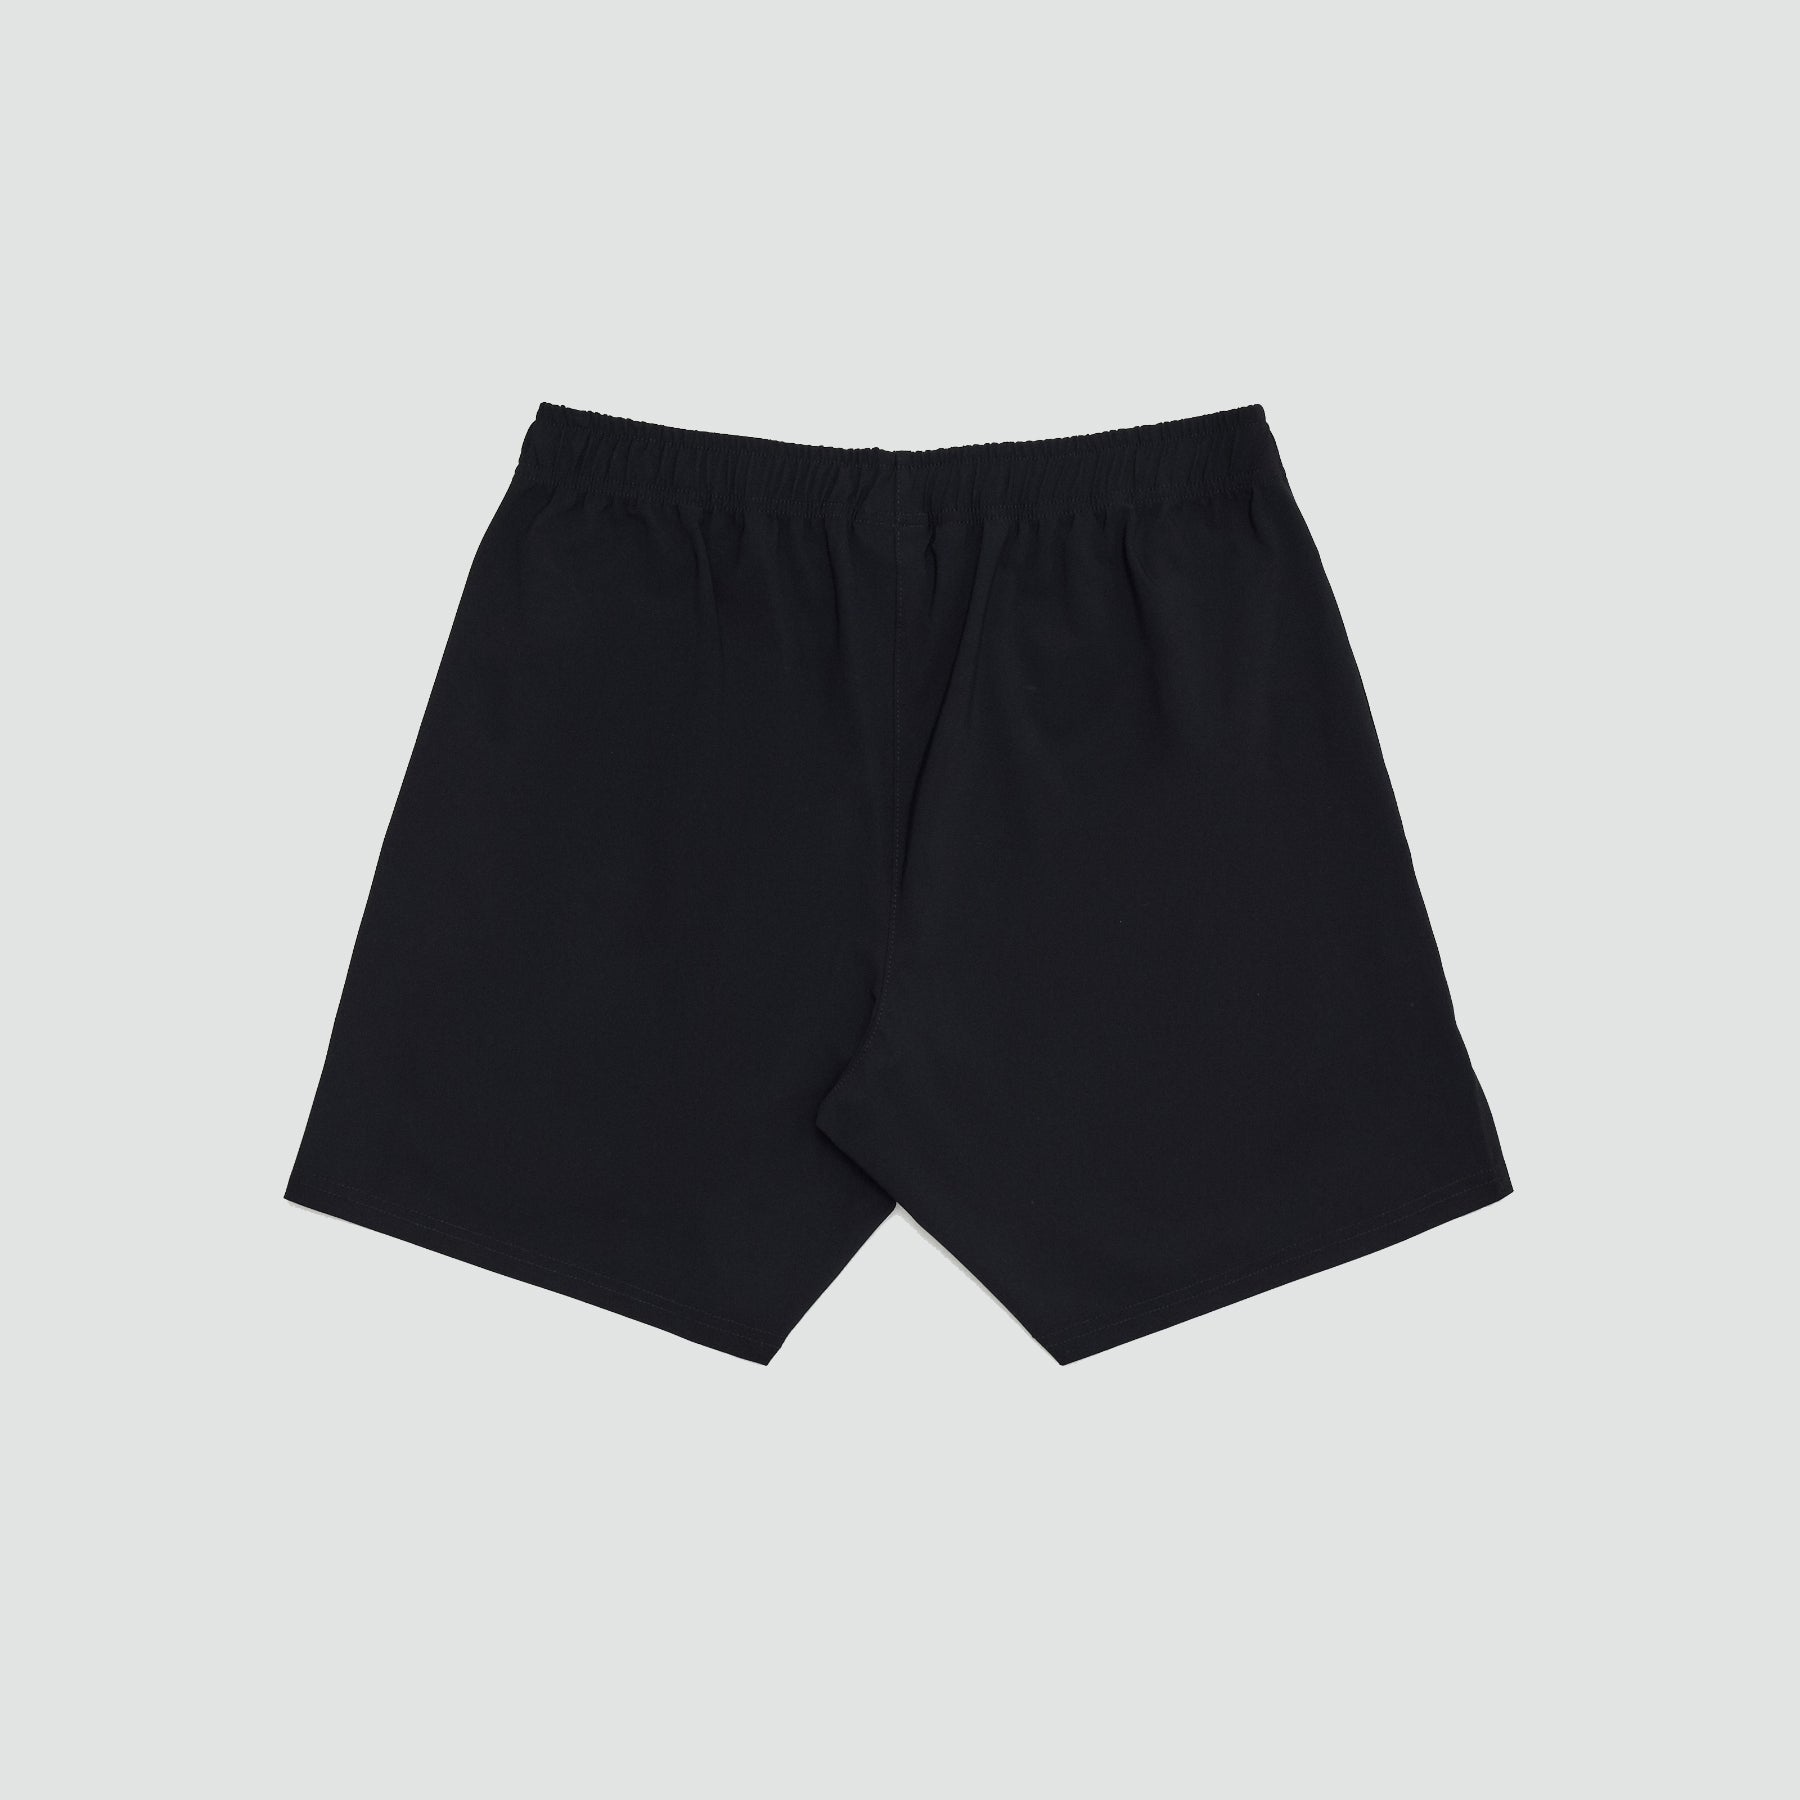 Rushbrooke Shorts - Black